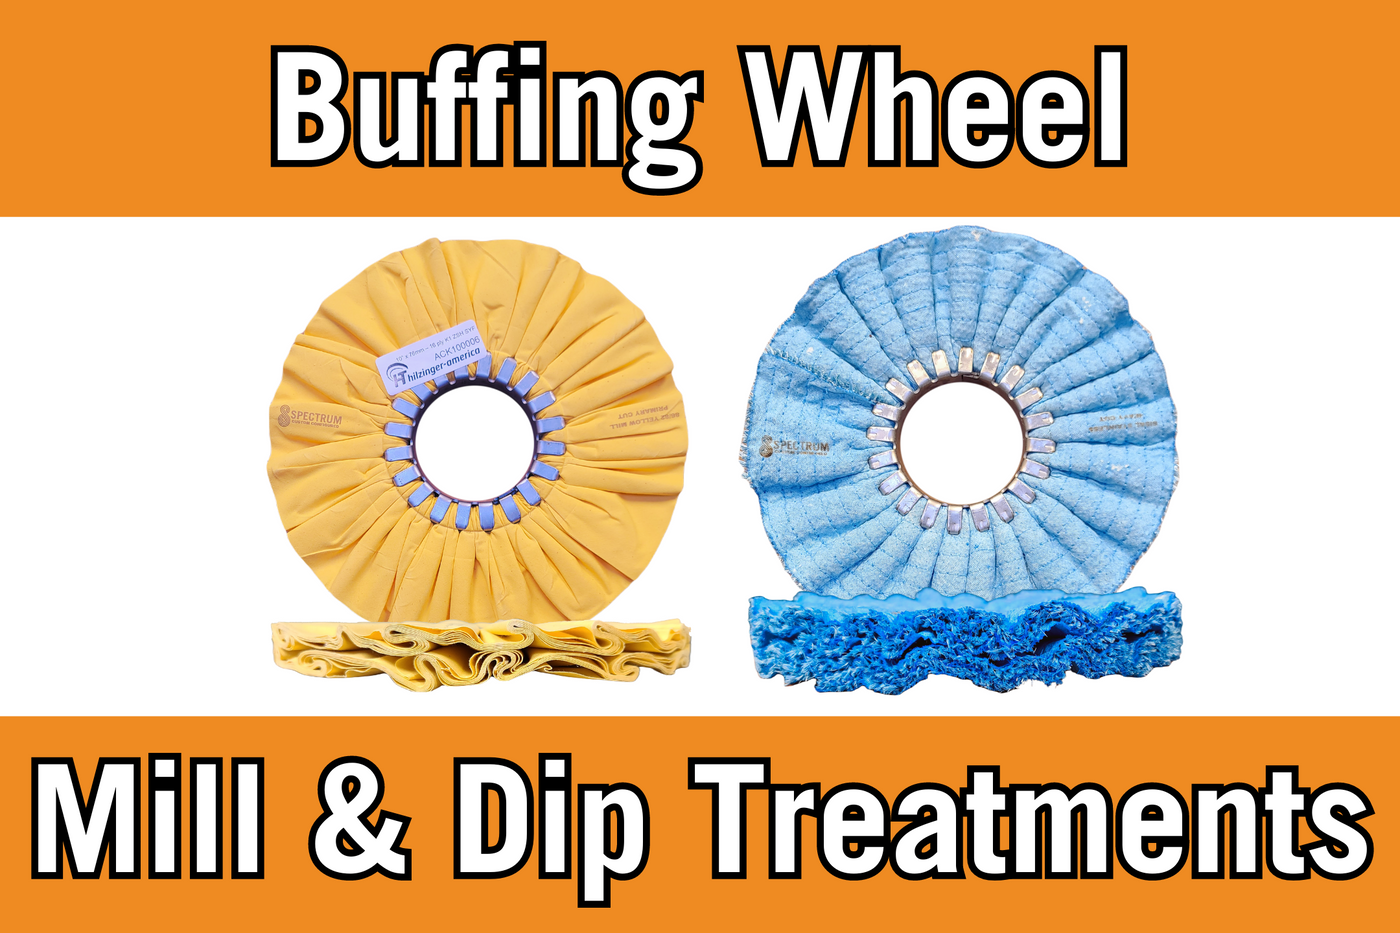 Buffing Wheel Treatments